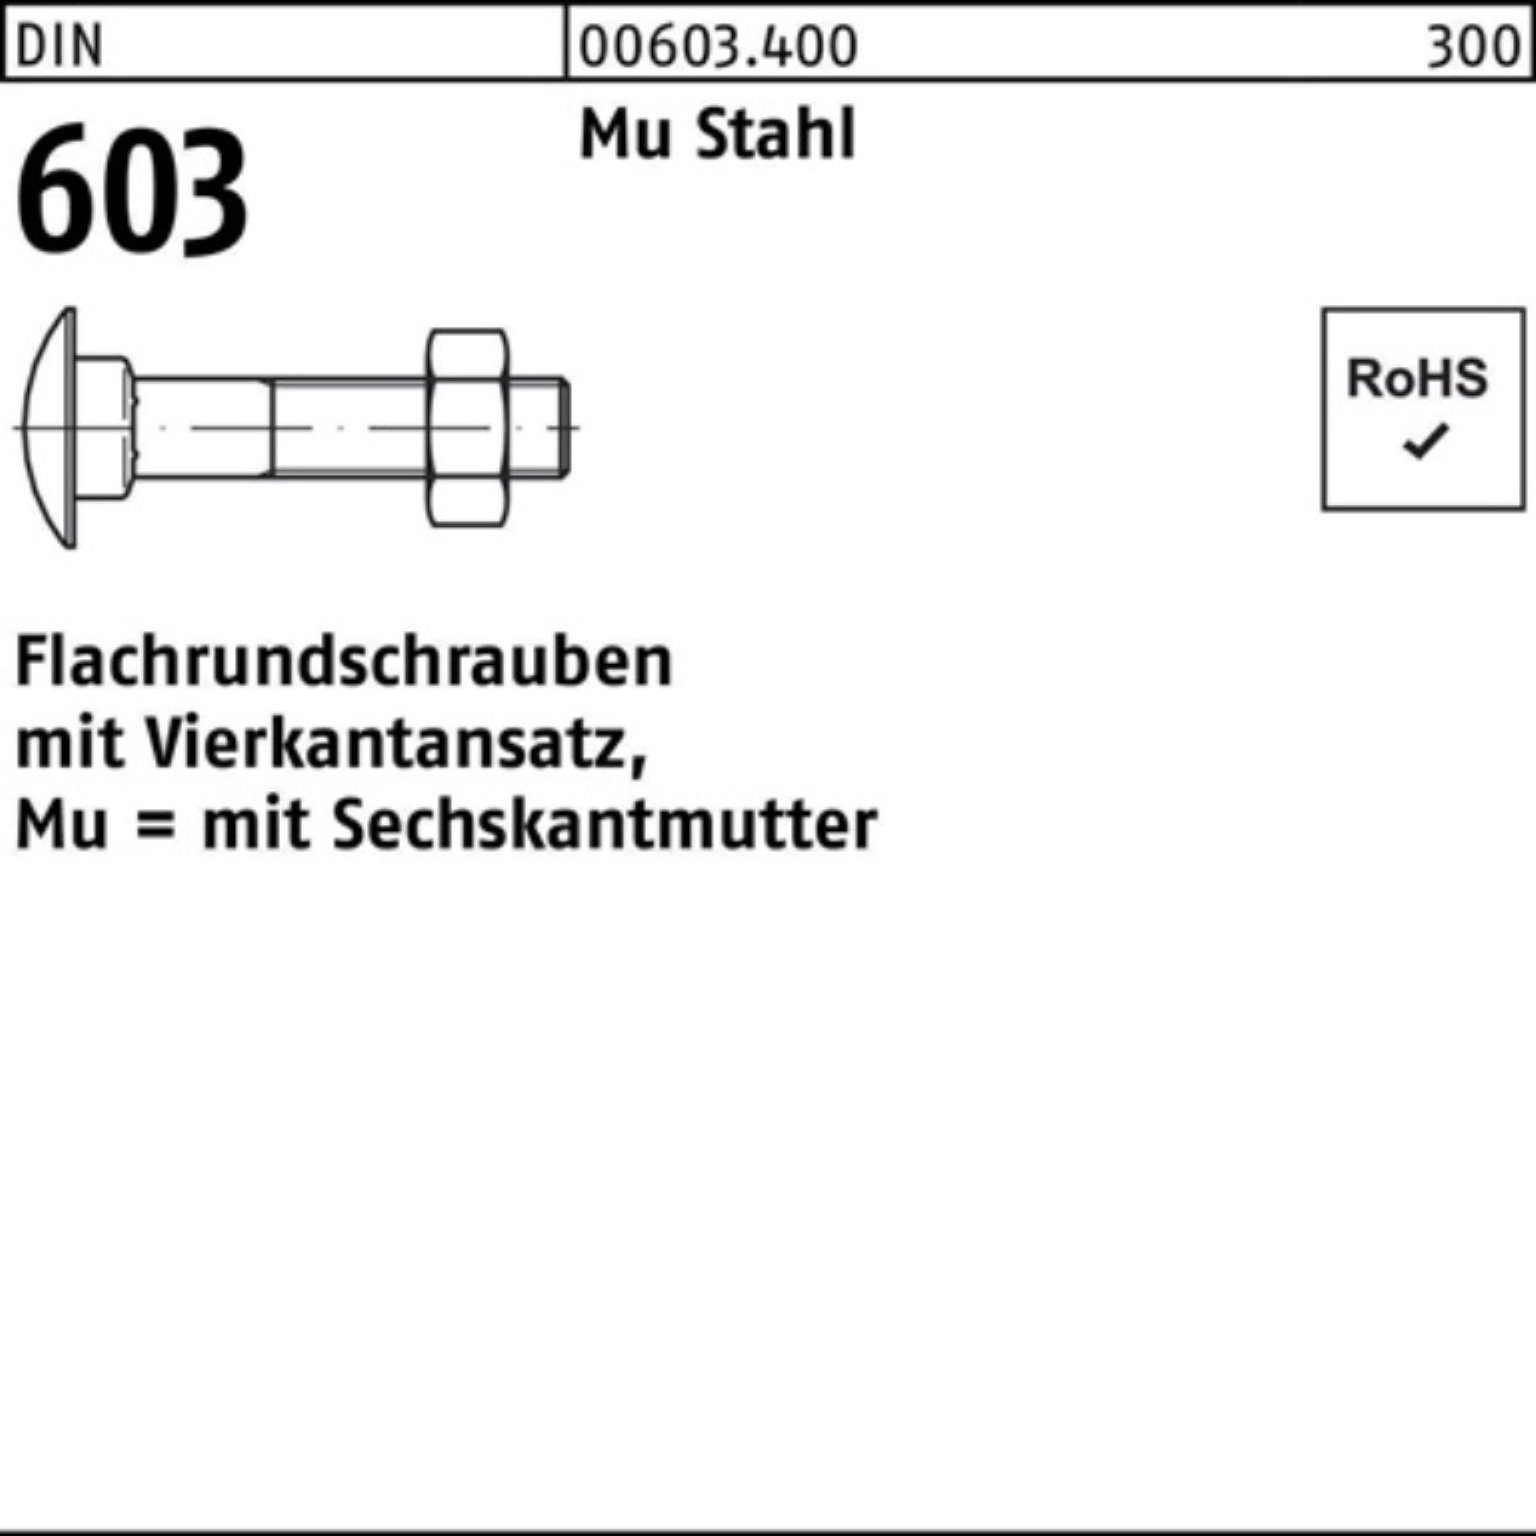 603 Reyher 100er DIN Pack Vierkantansatz/6-ktmutter M10x300 Schraube Flachrundschraube